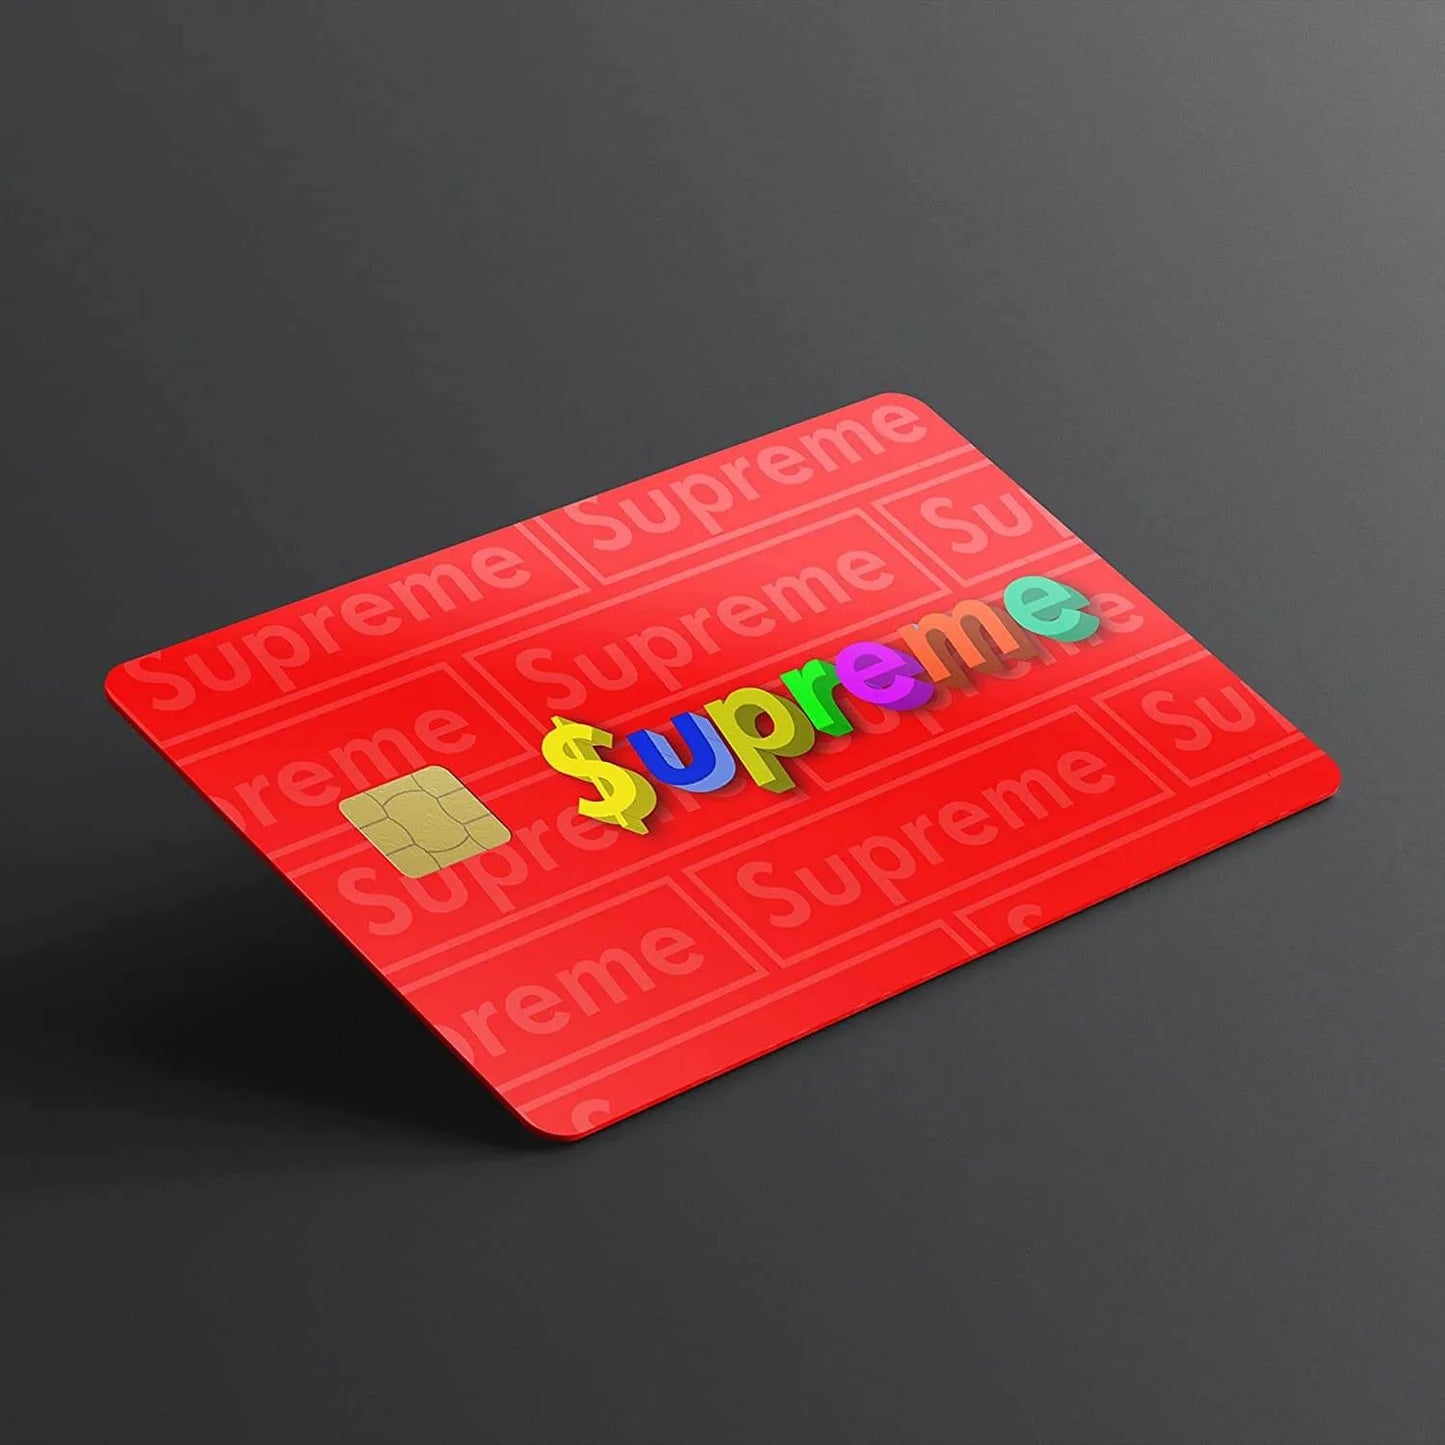 Supreme credit card skins